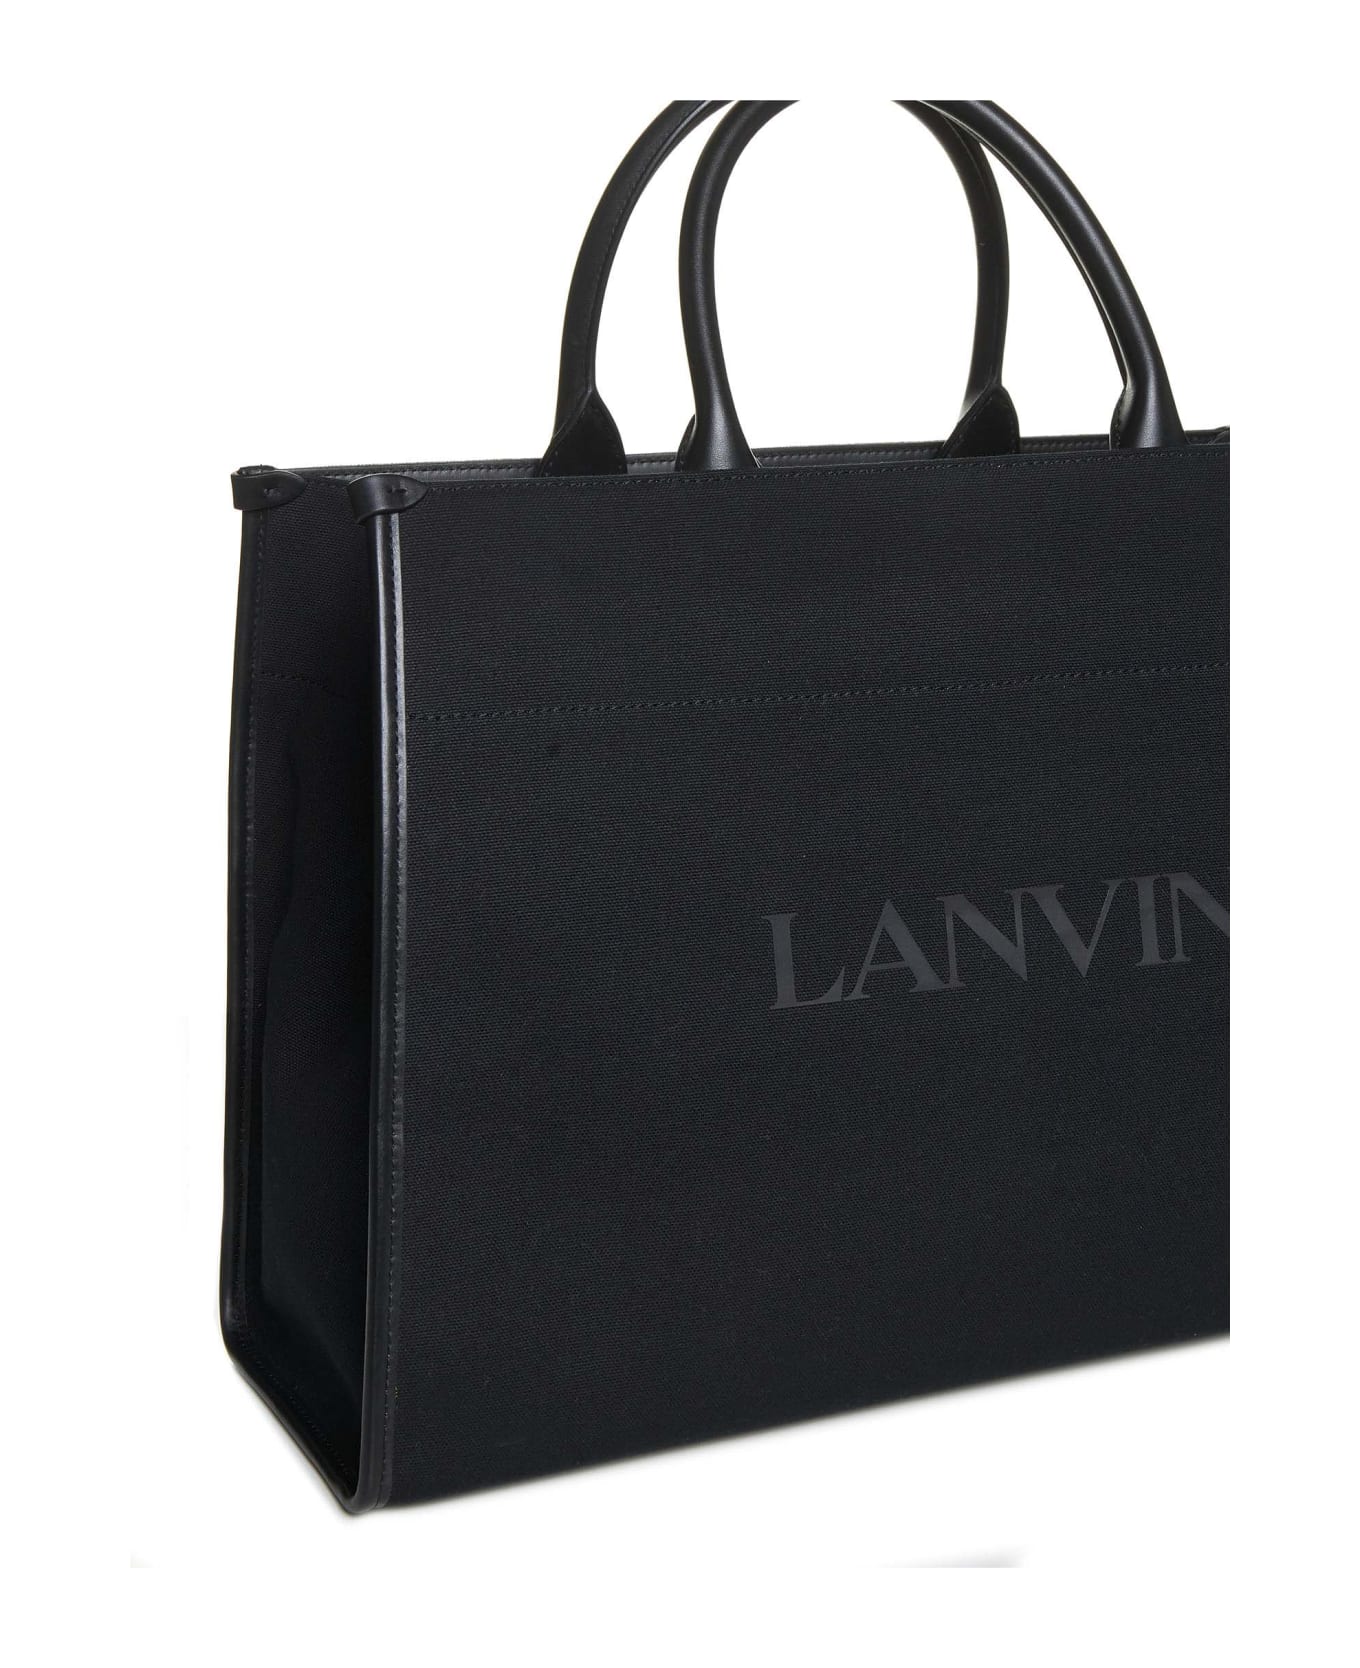 Lanvin Bag - Black